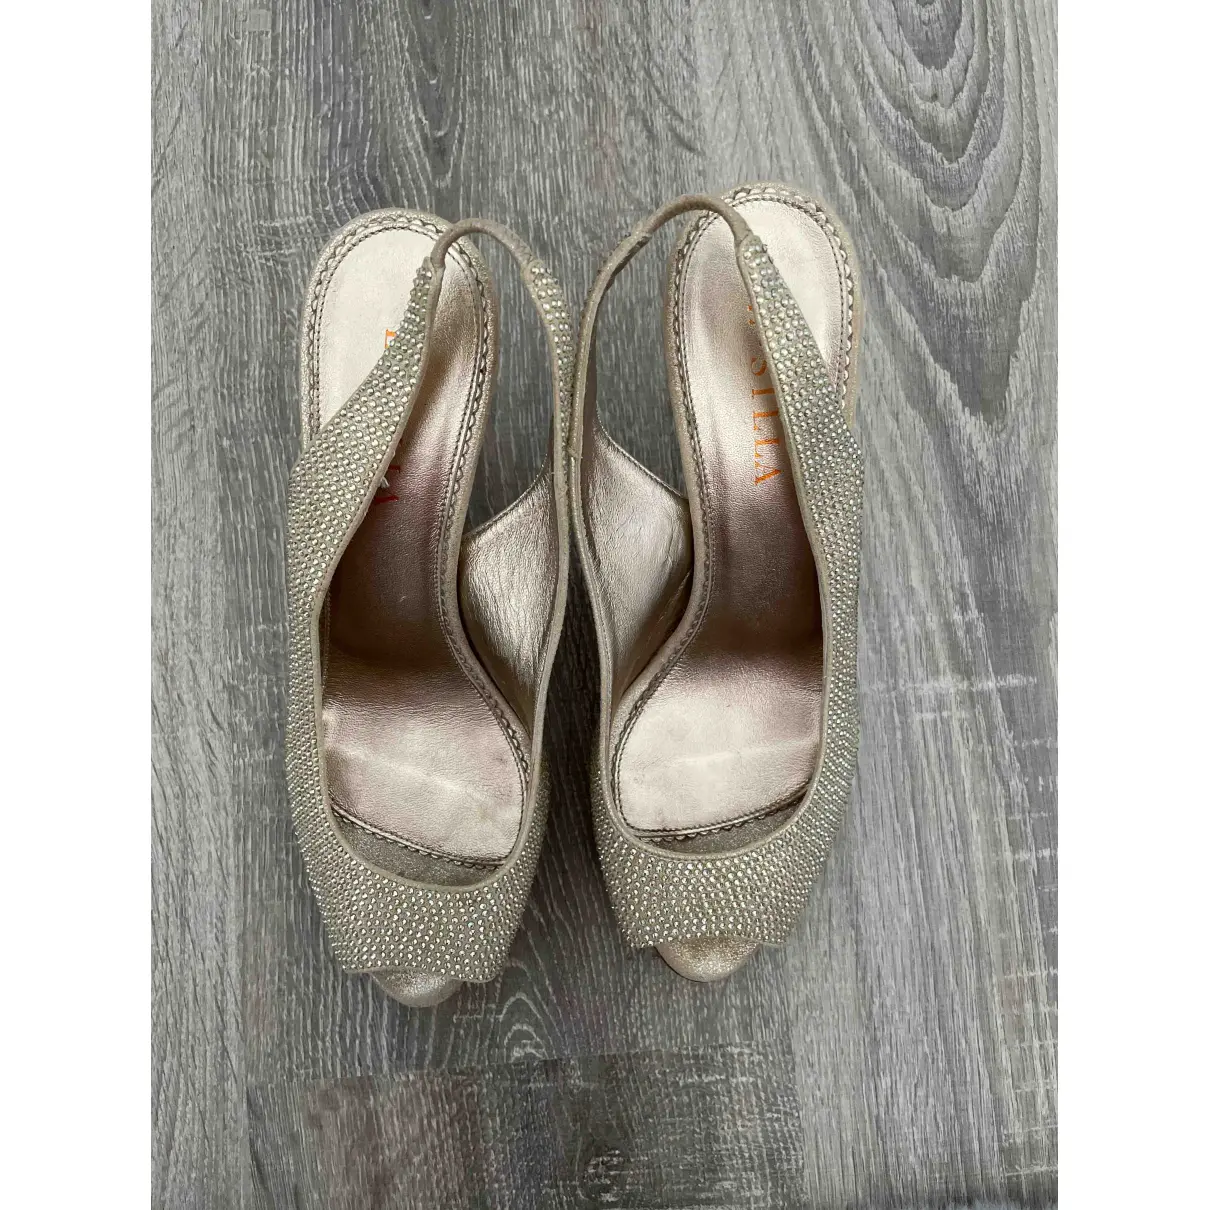 Buy Le Silla Glitter sandals online